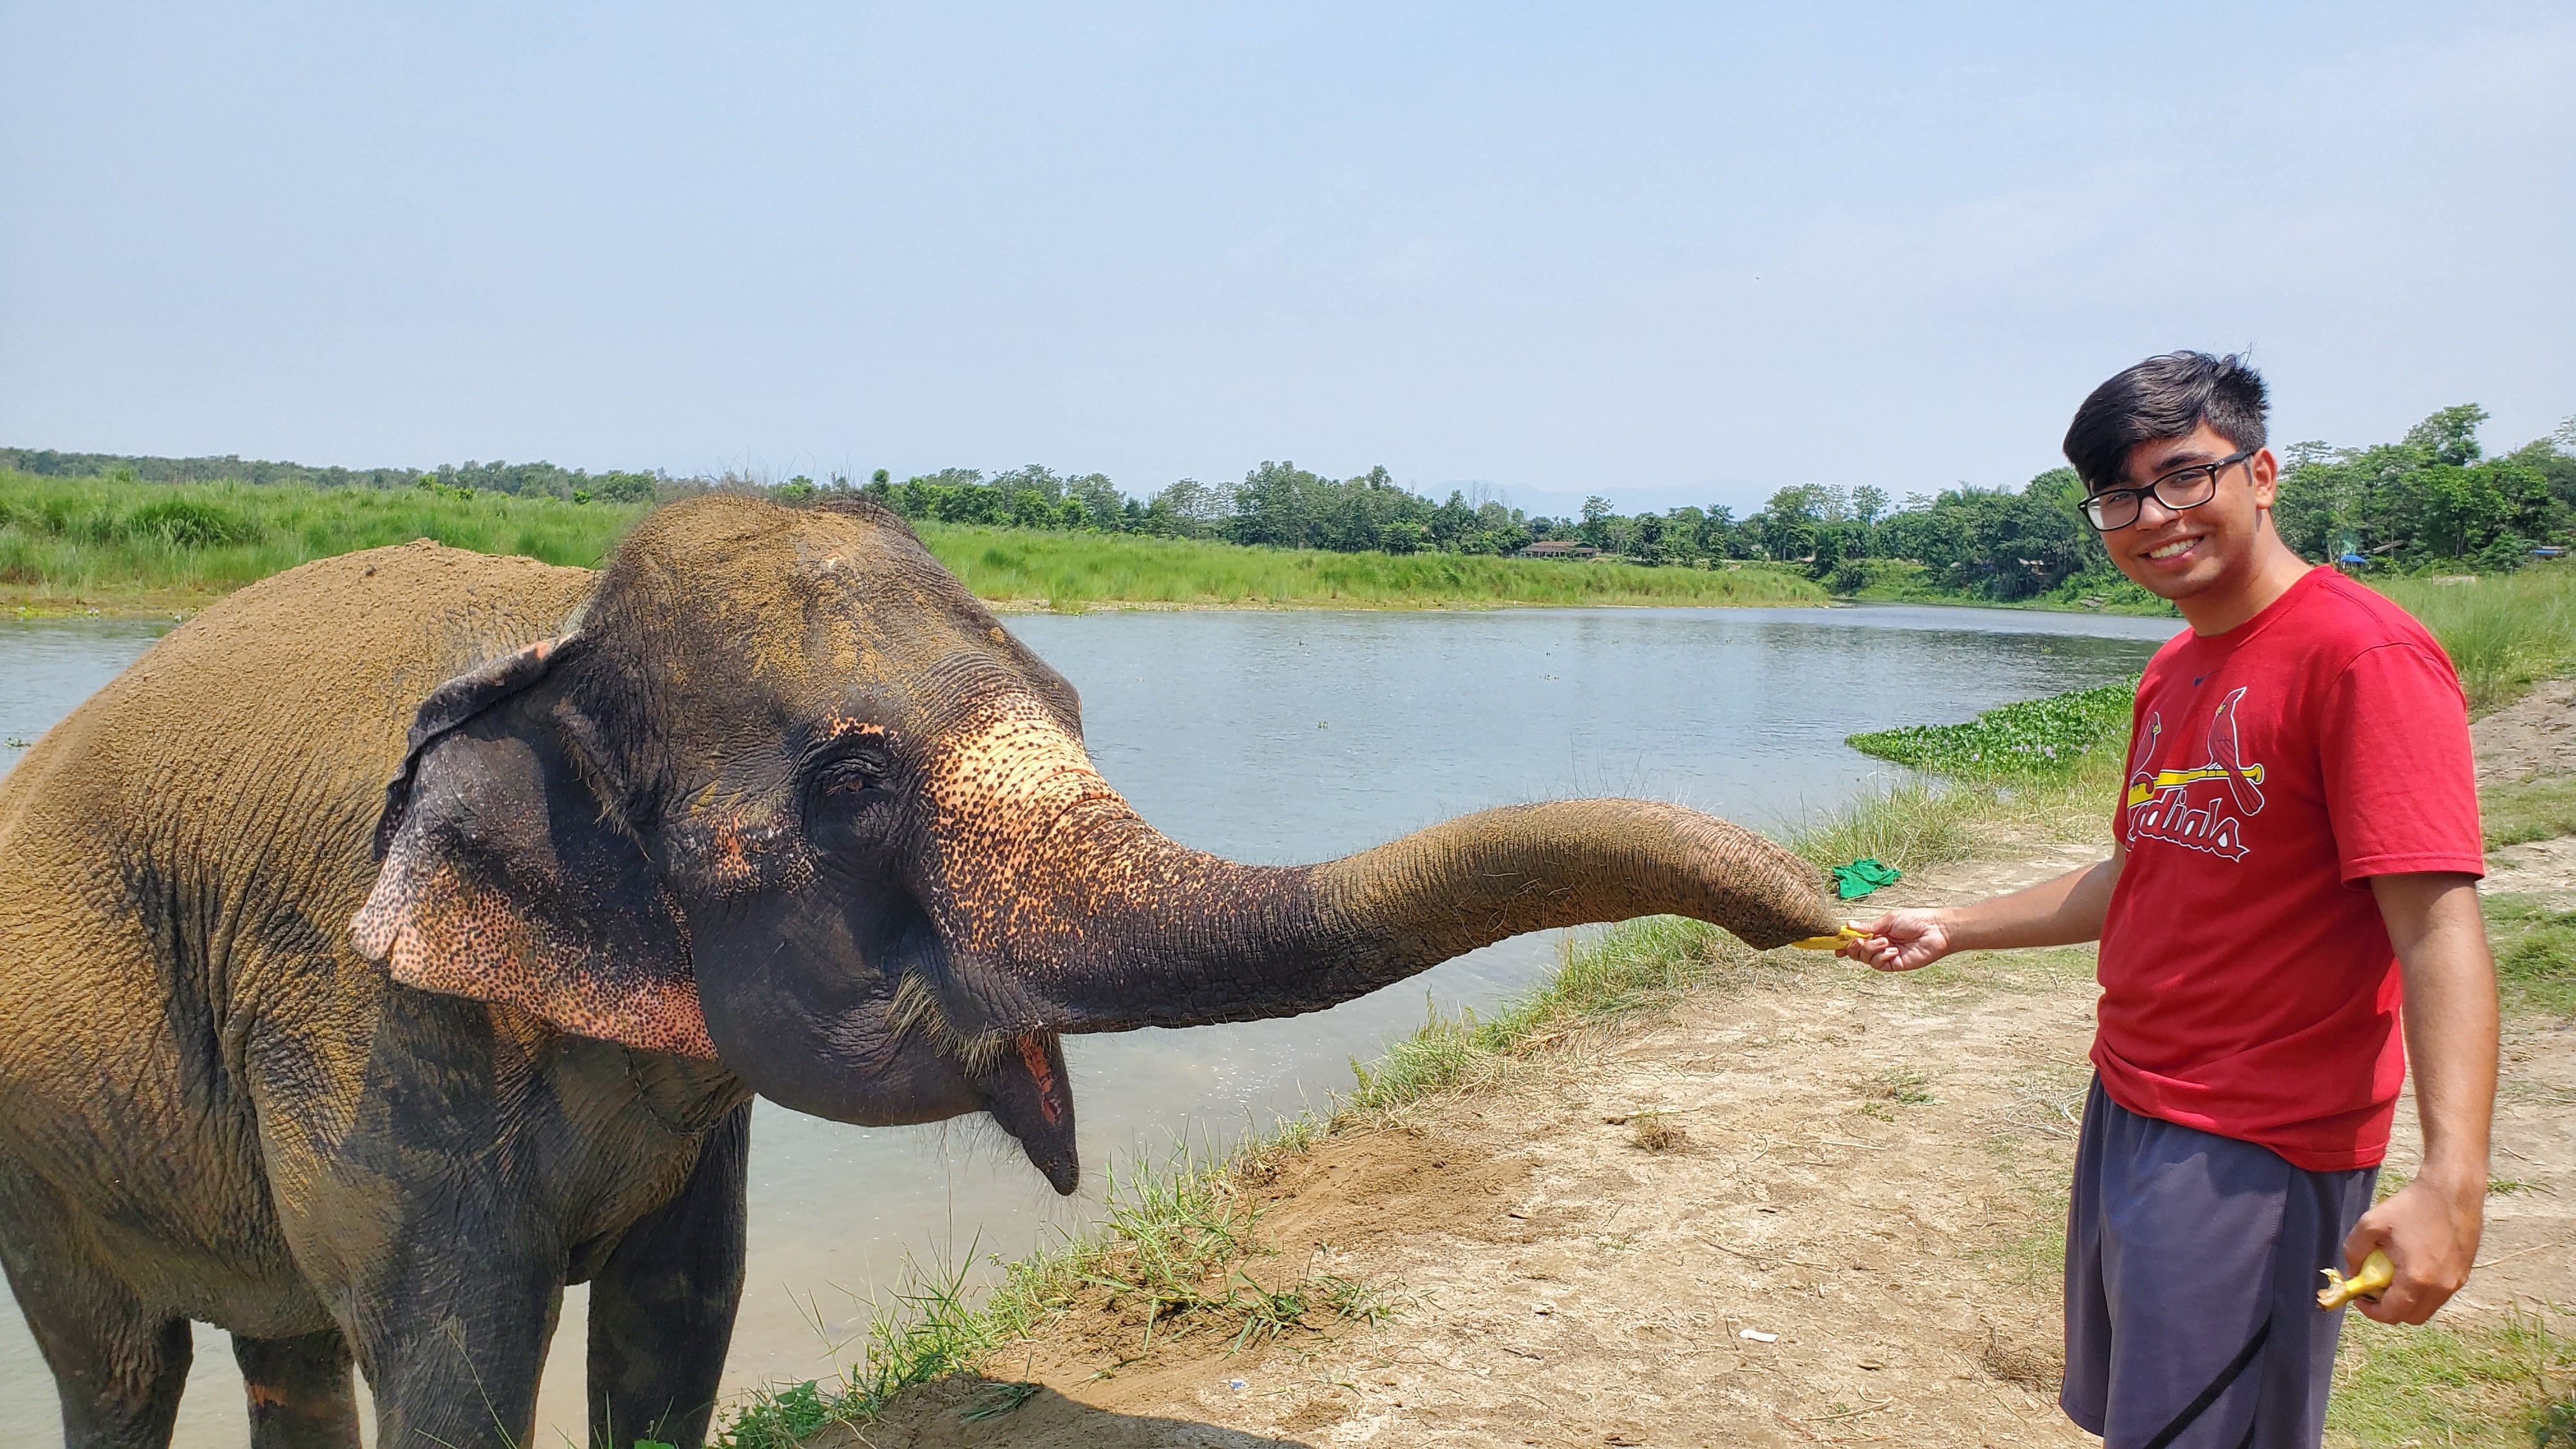 Feeding an Elephant in Chitwan, Nepal